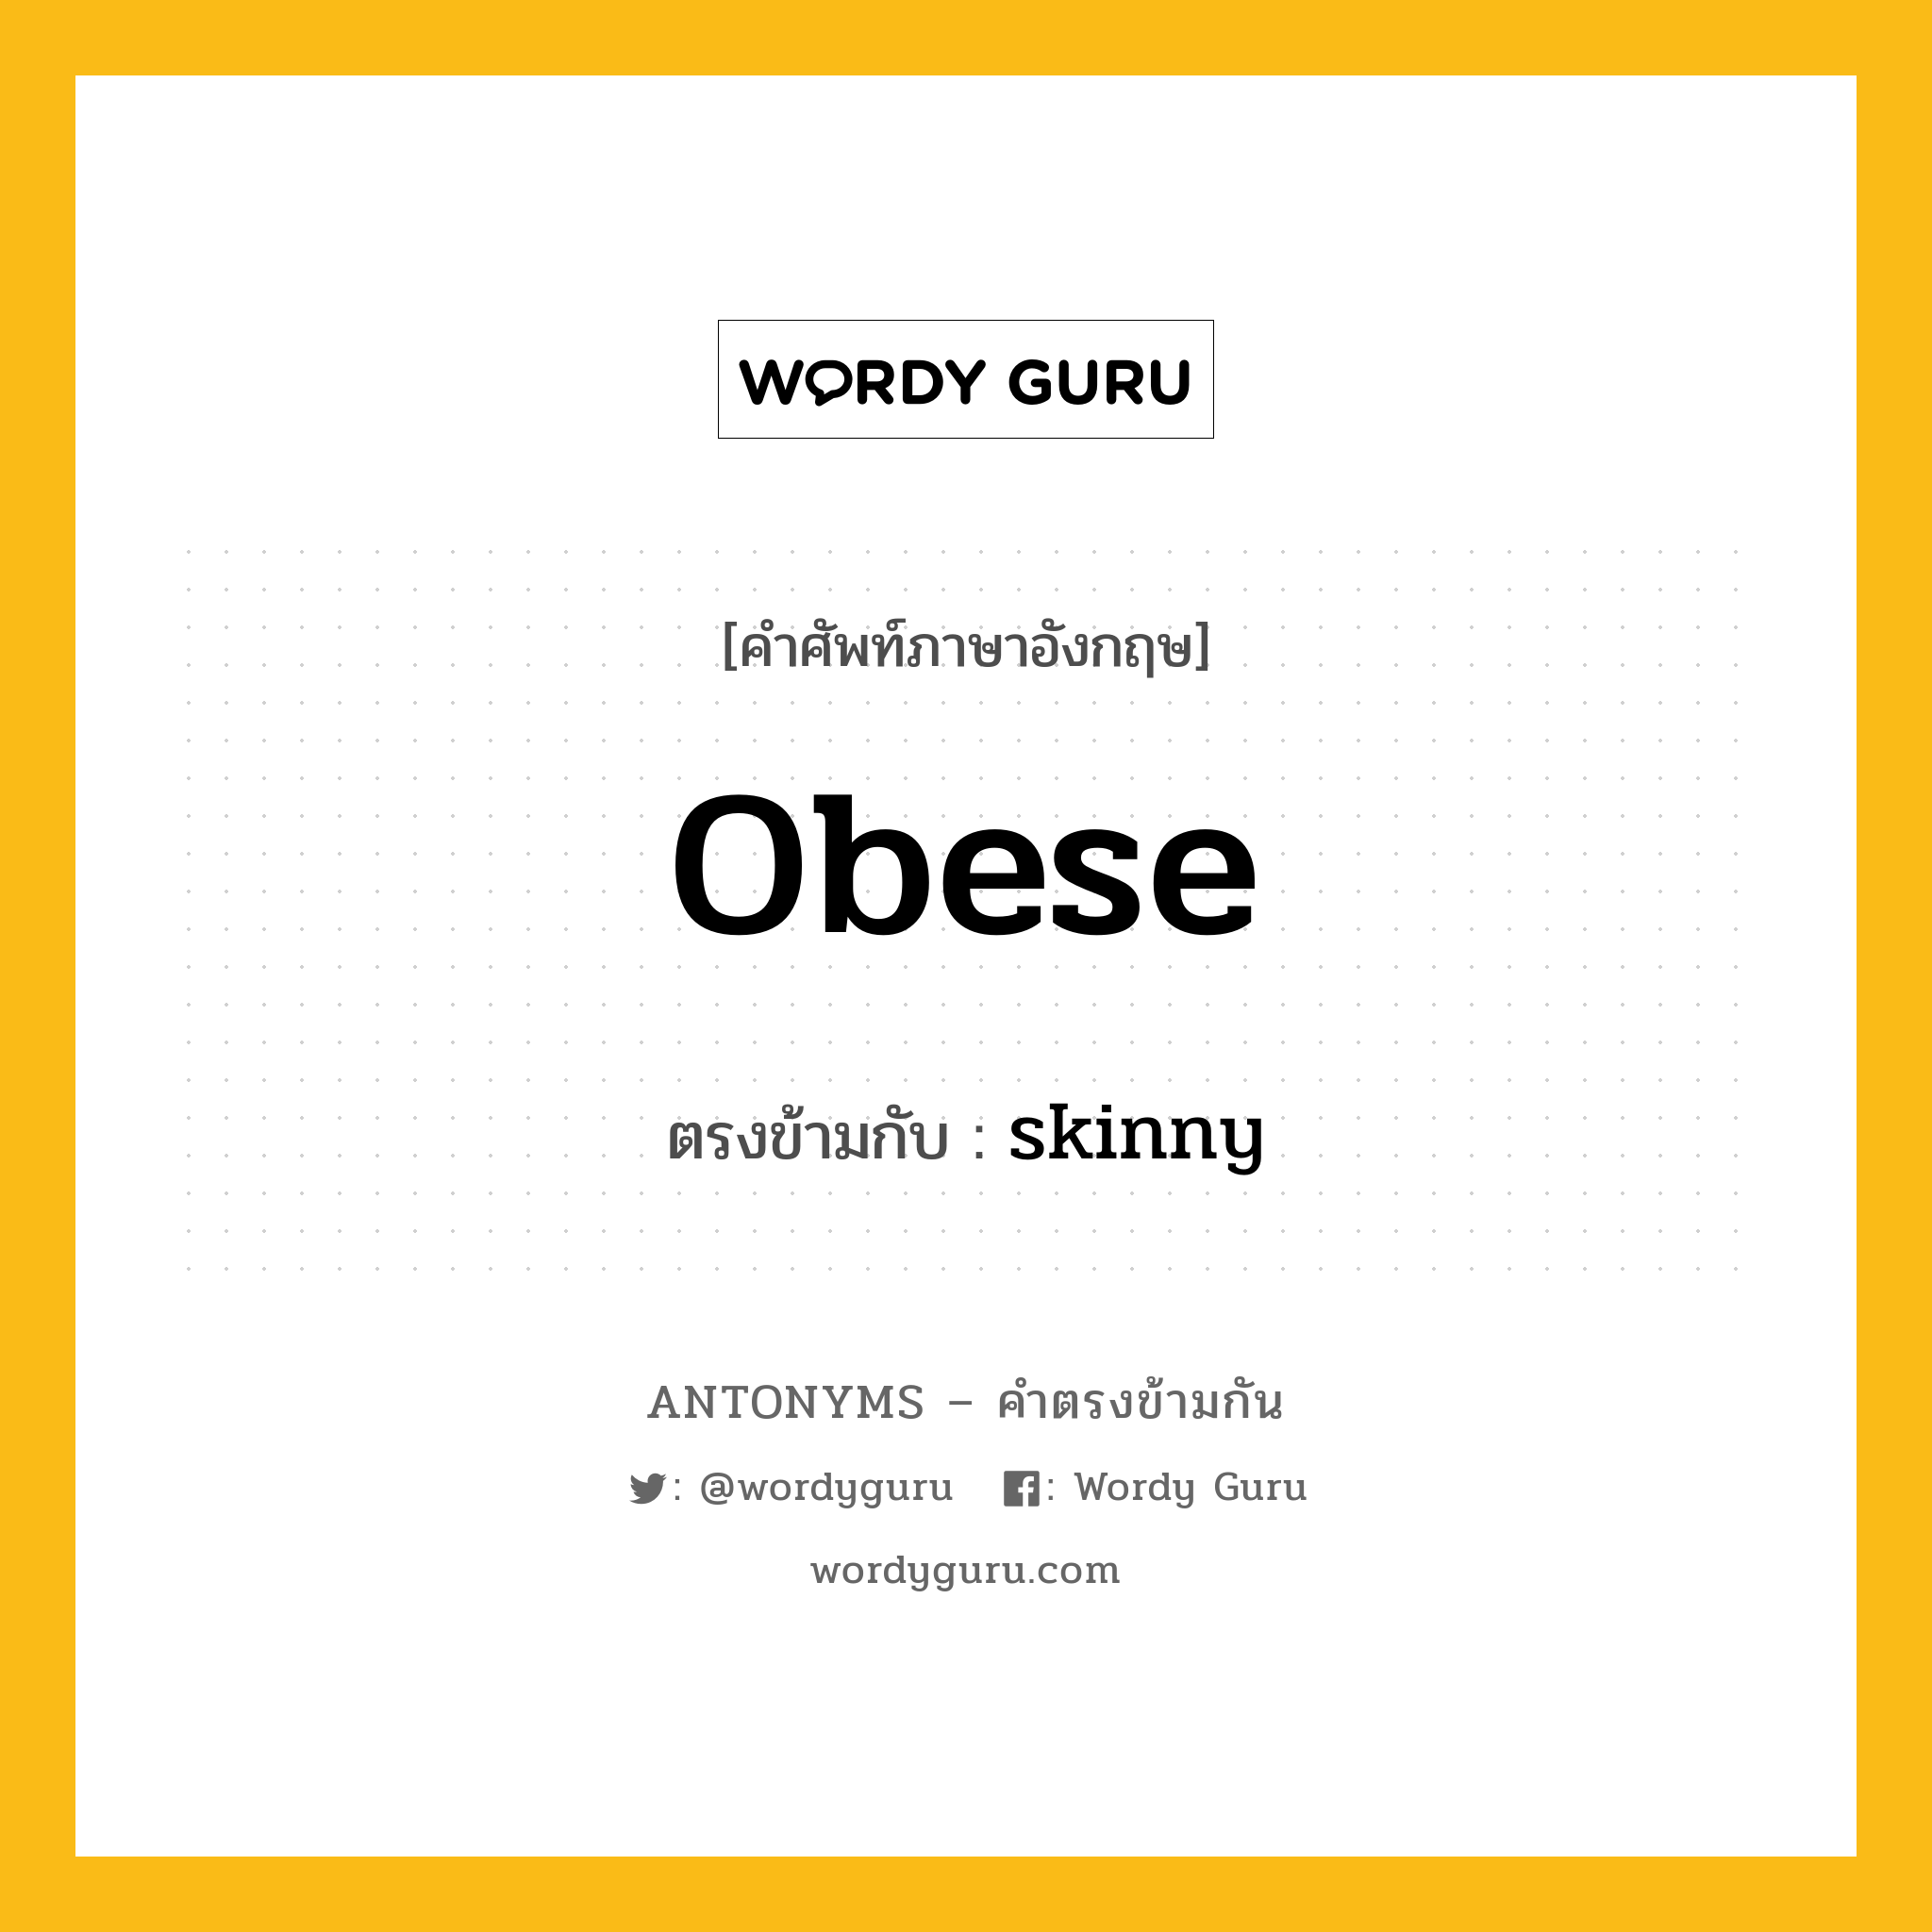 obese เป็นคำตรงข้ามกับคำไหนบ้าง?, คำศัพท์ภาษาอังกฤษ obese ตรงข้ามกับ skinny หมวด skinny